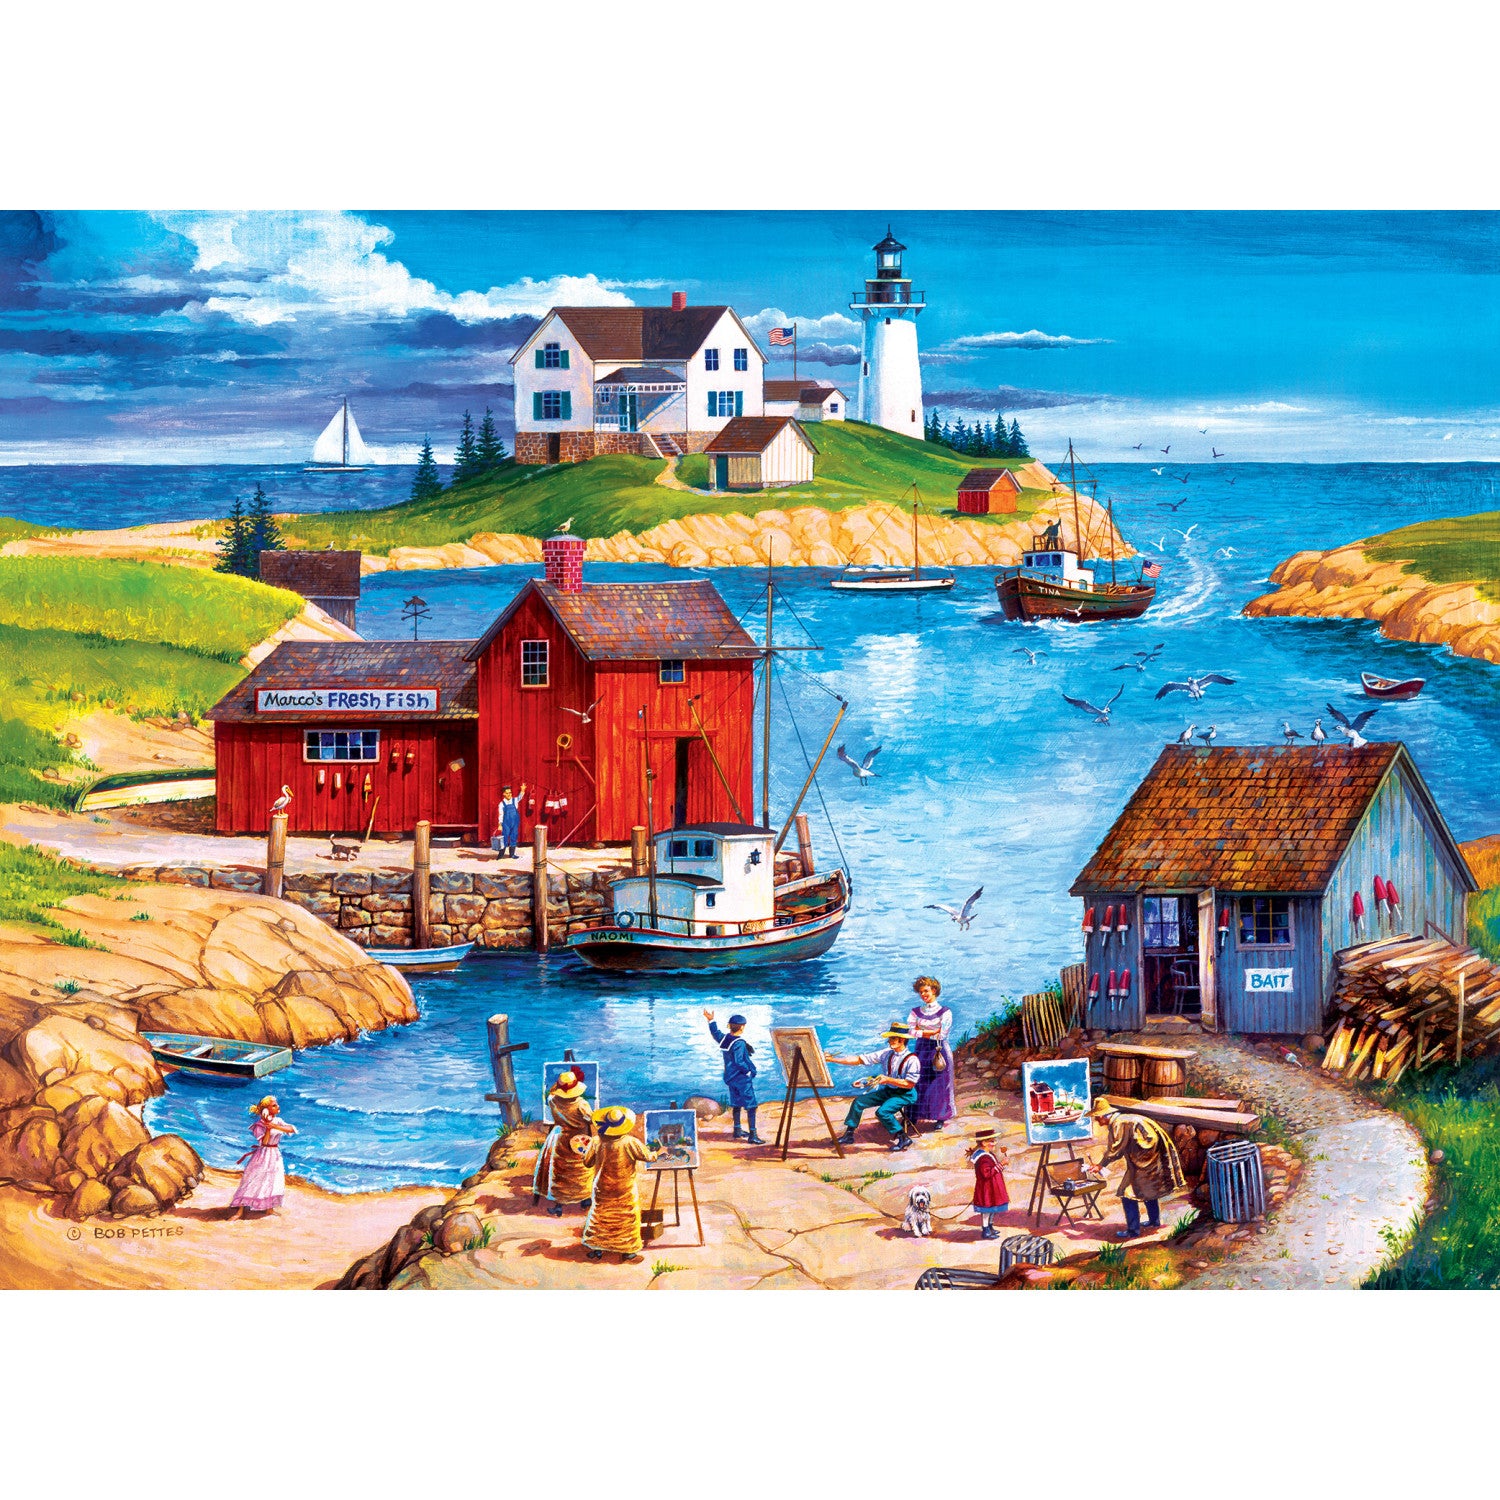 Hometown Gallery - Ladium Bay 1000 Piece Puzzle